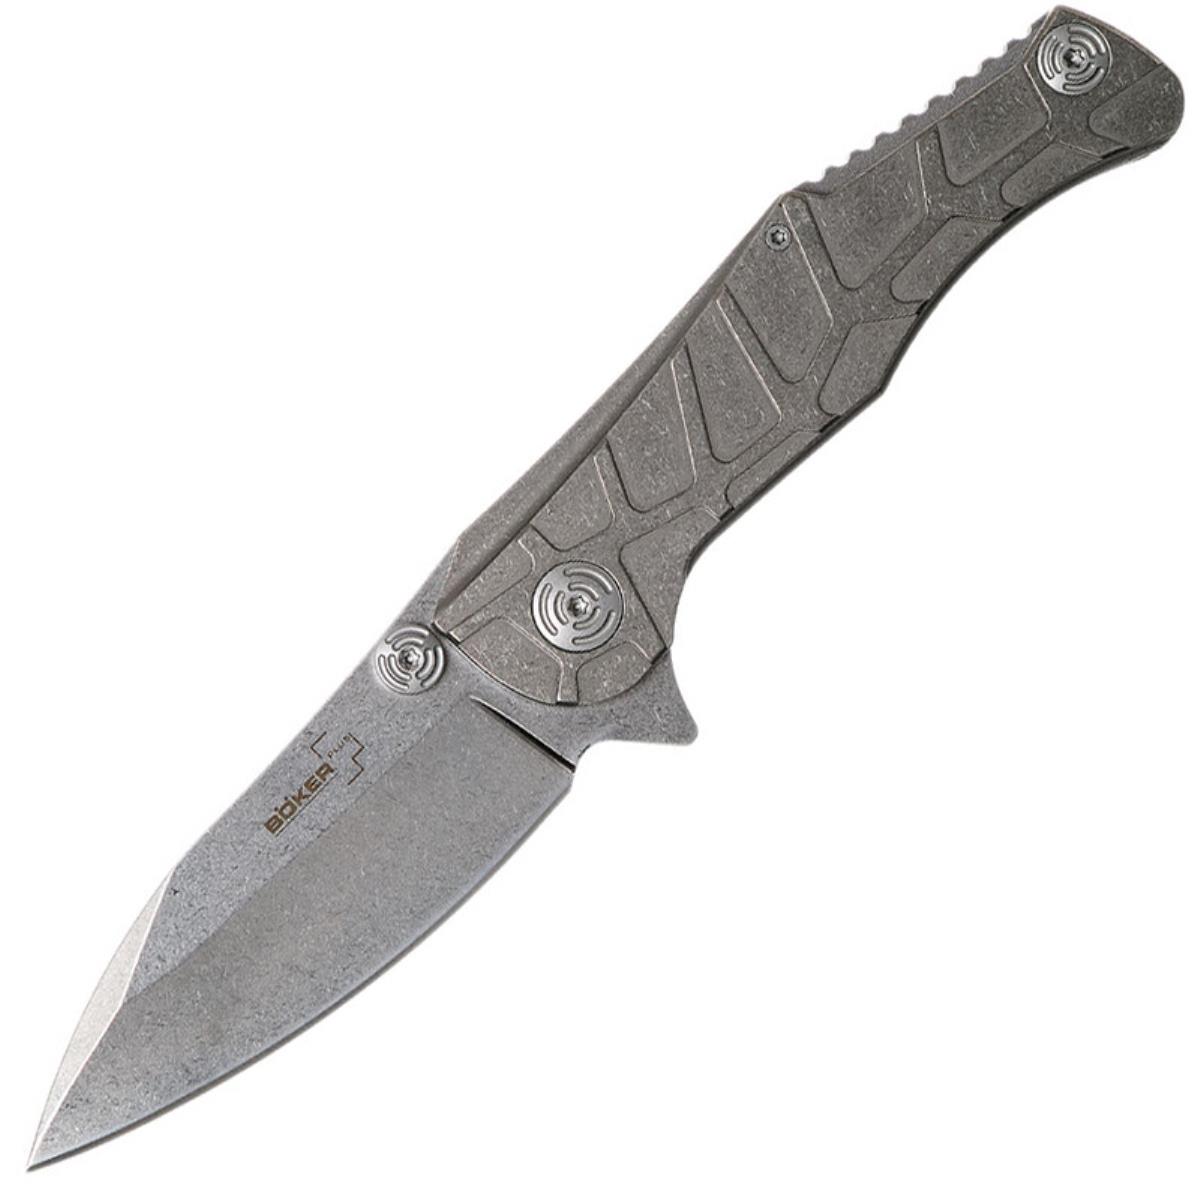 Нож  складной рукоять титановая, сталь 440C  BK01BO616  Dreed Boker нож складной b055 полуавтомат